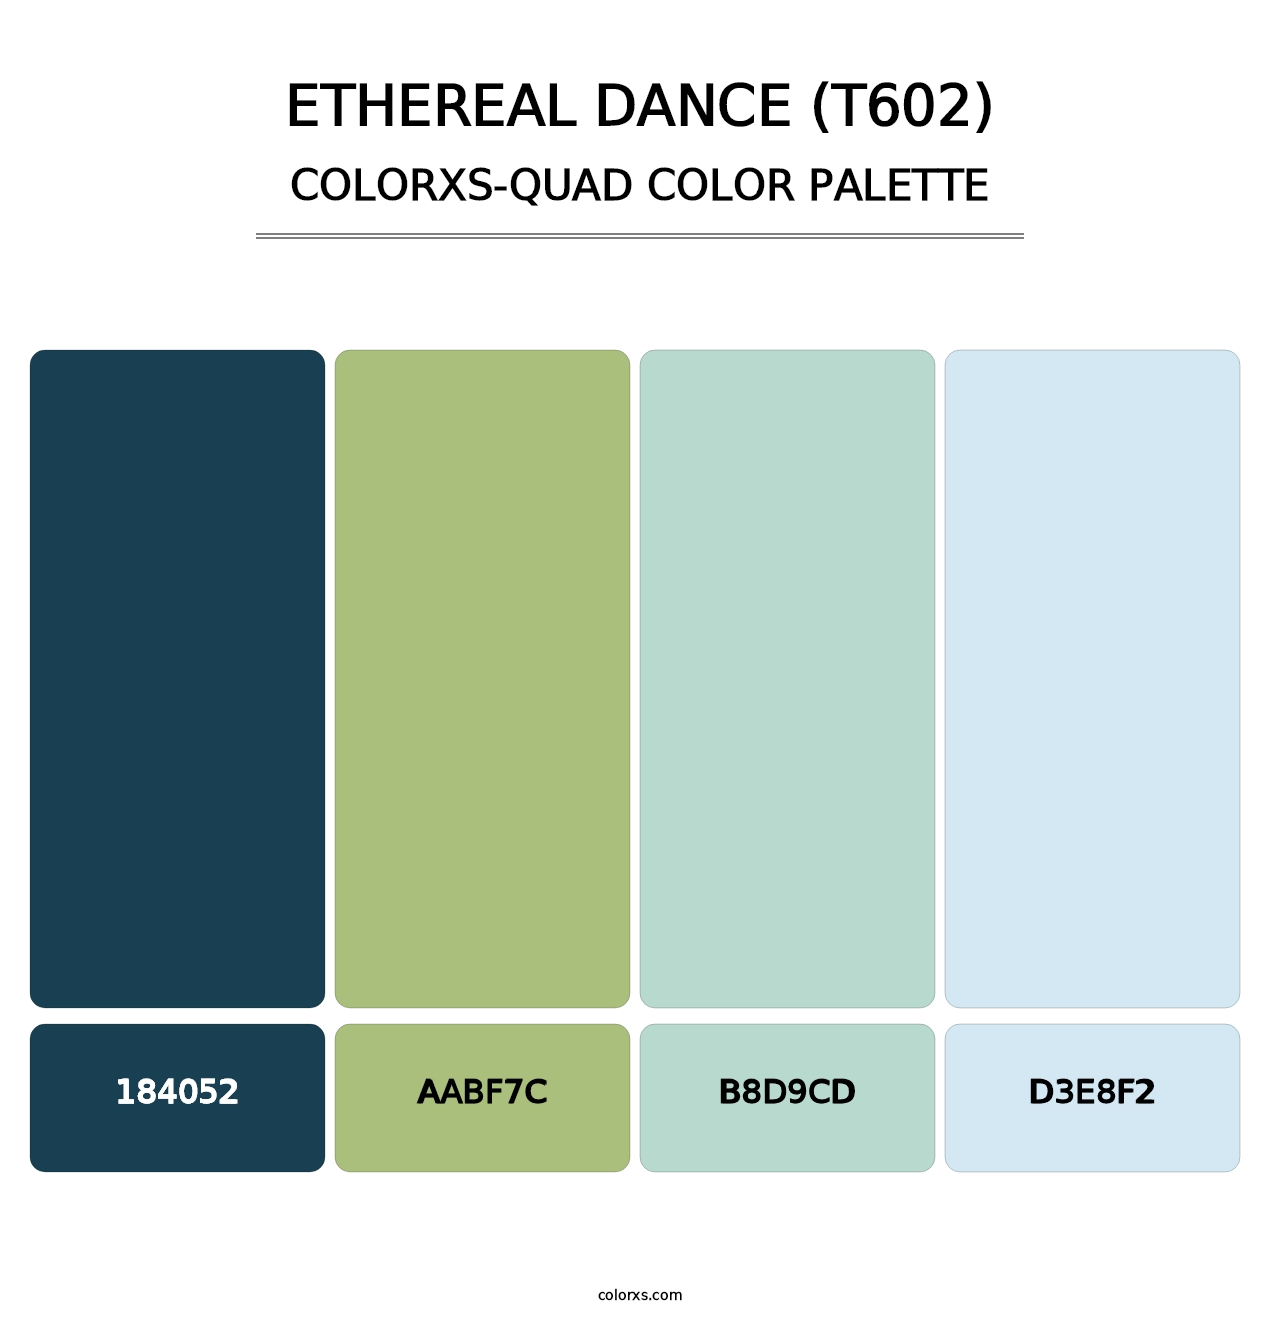 Ethereal Dance (T602) - Colorxs Quad Palette